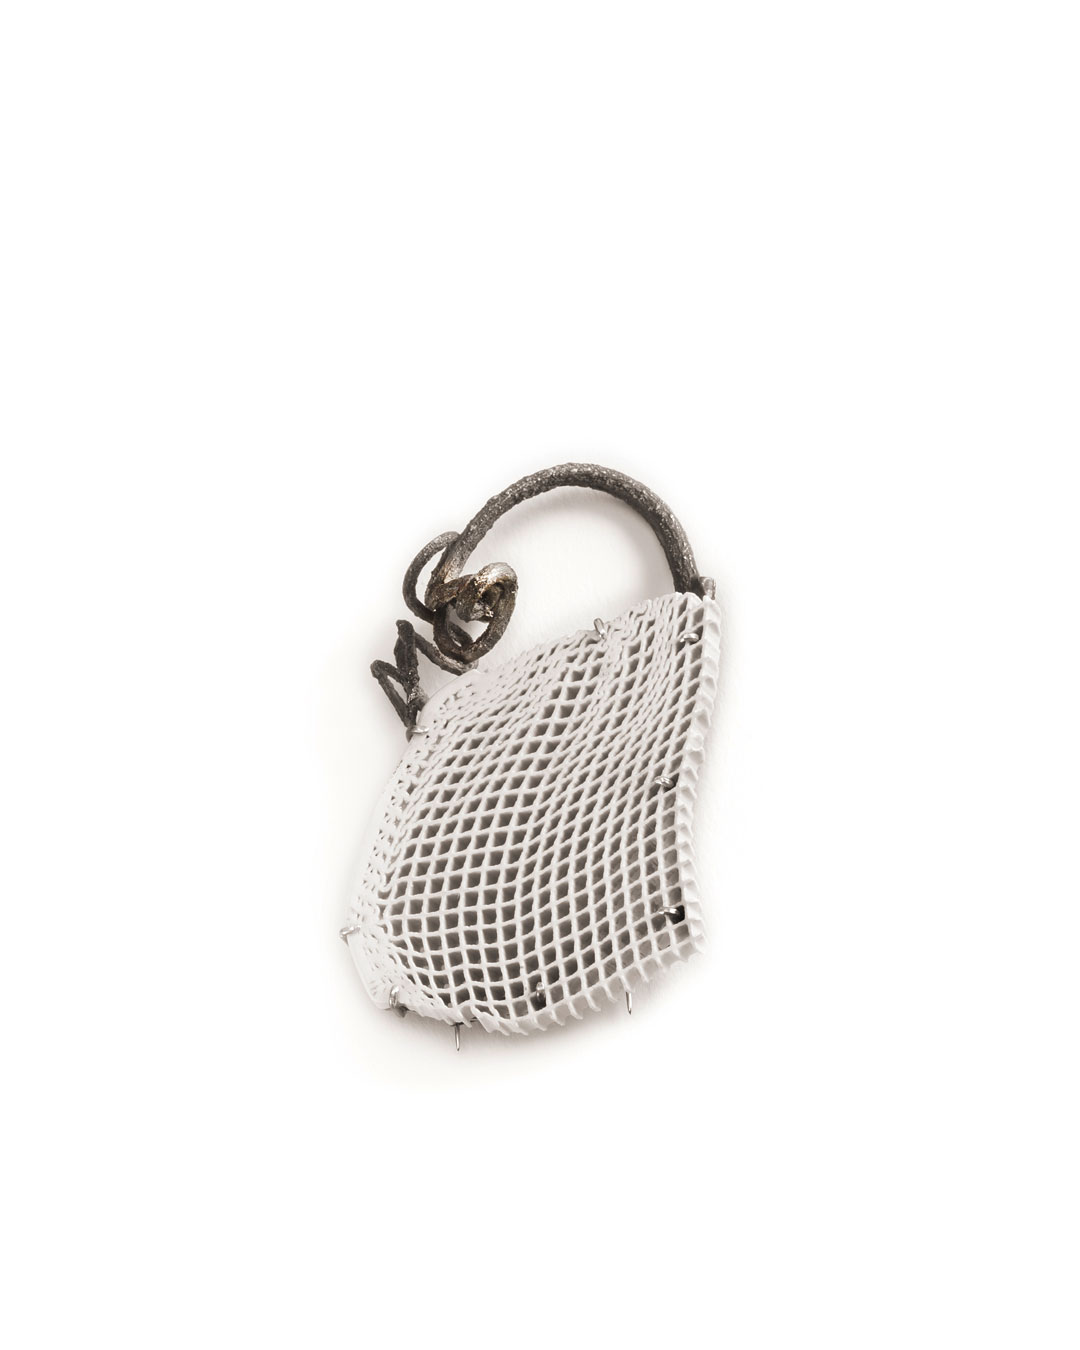 Silke Trekel, Handtasche (Handbag), 2014, brooch; porcelain, silver, 46 x 76 x 8 mm, €780